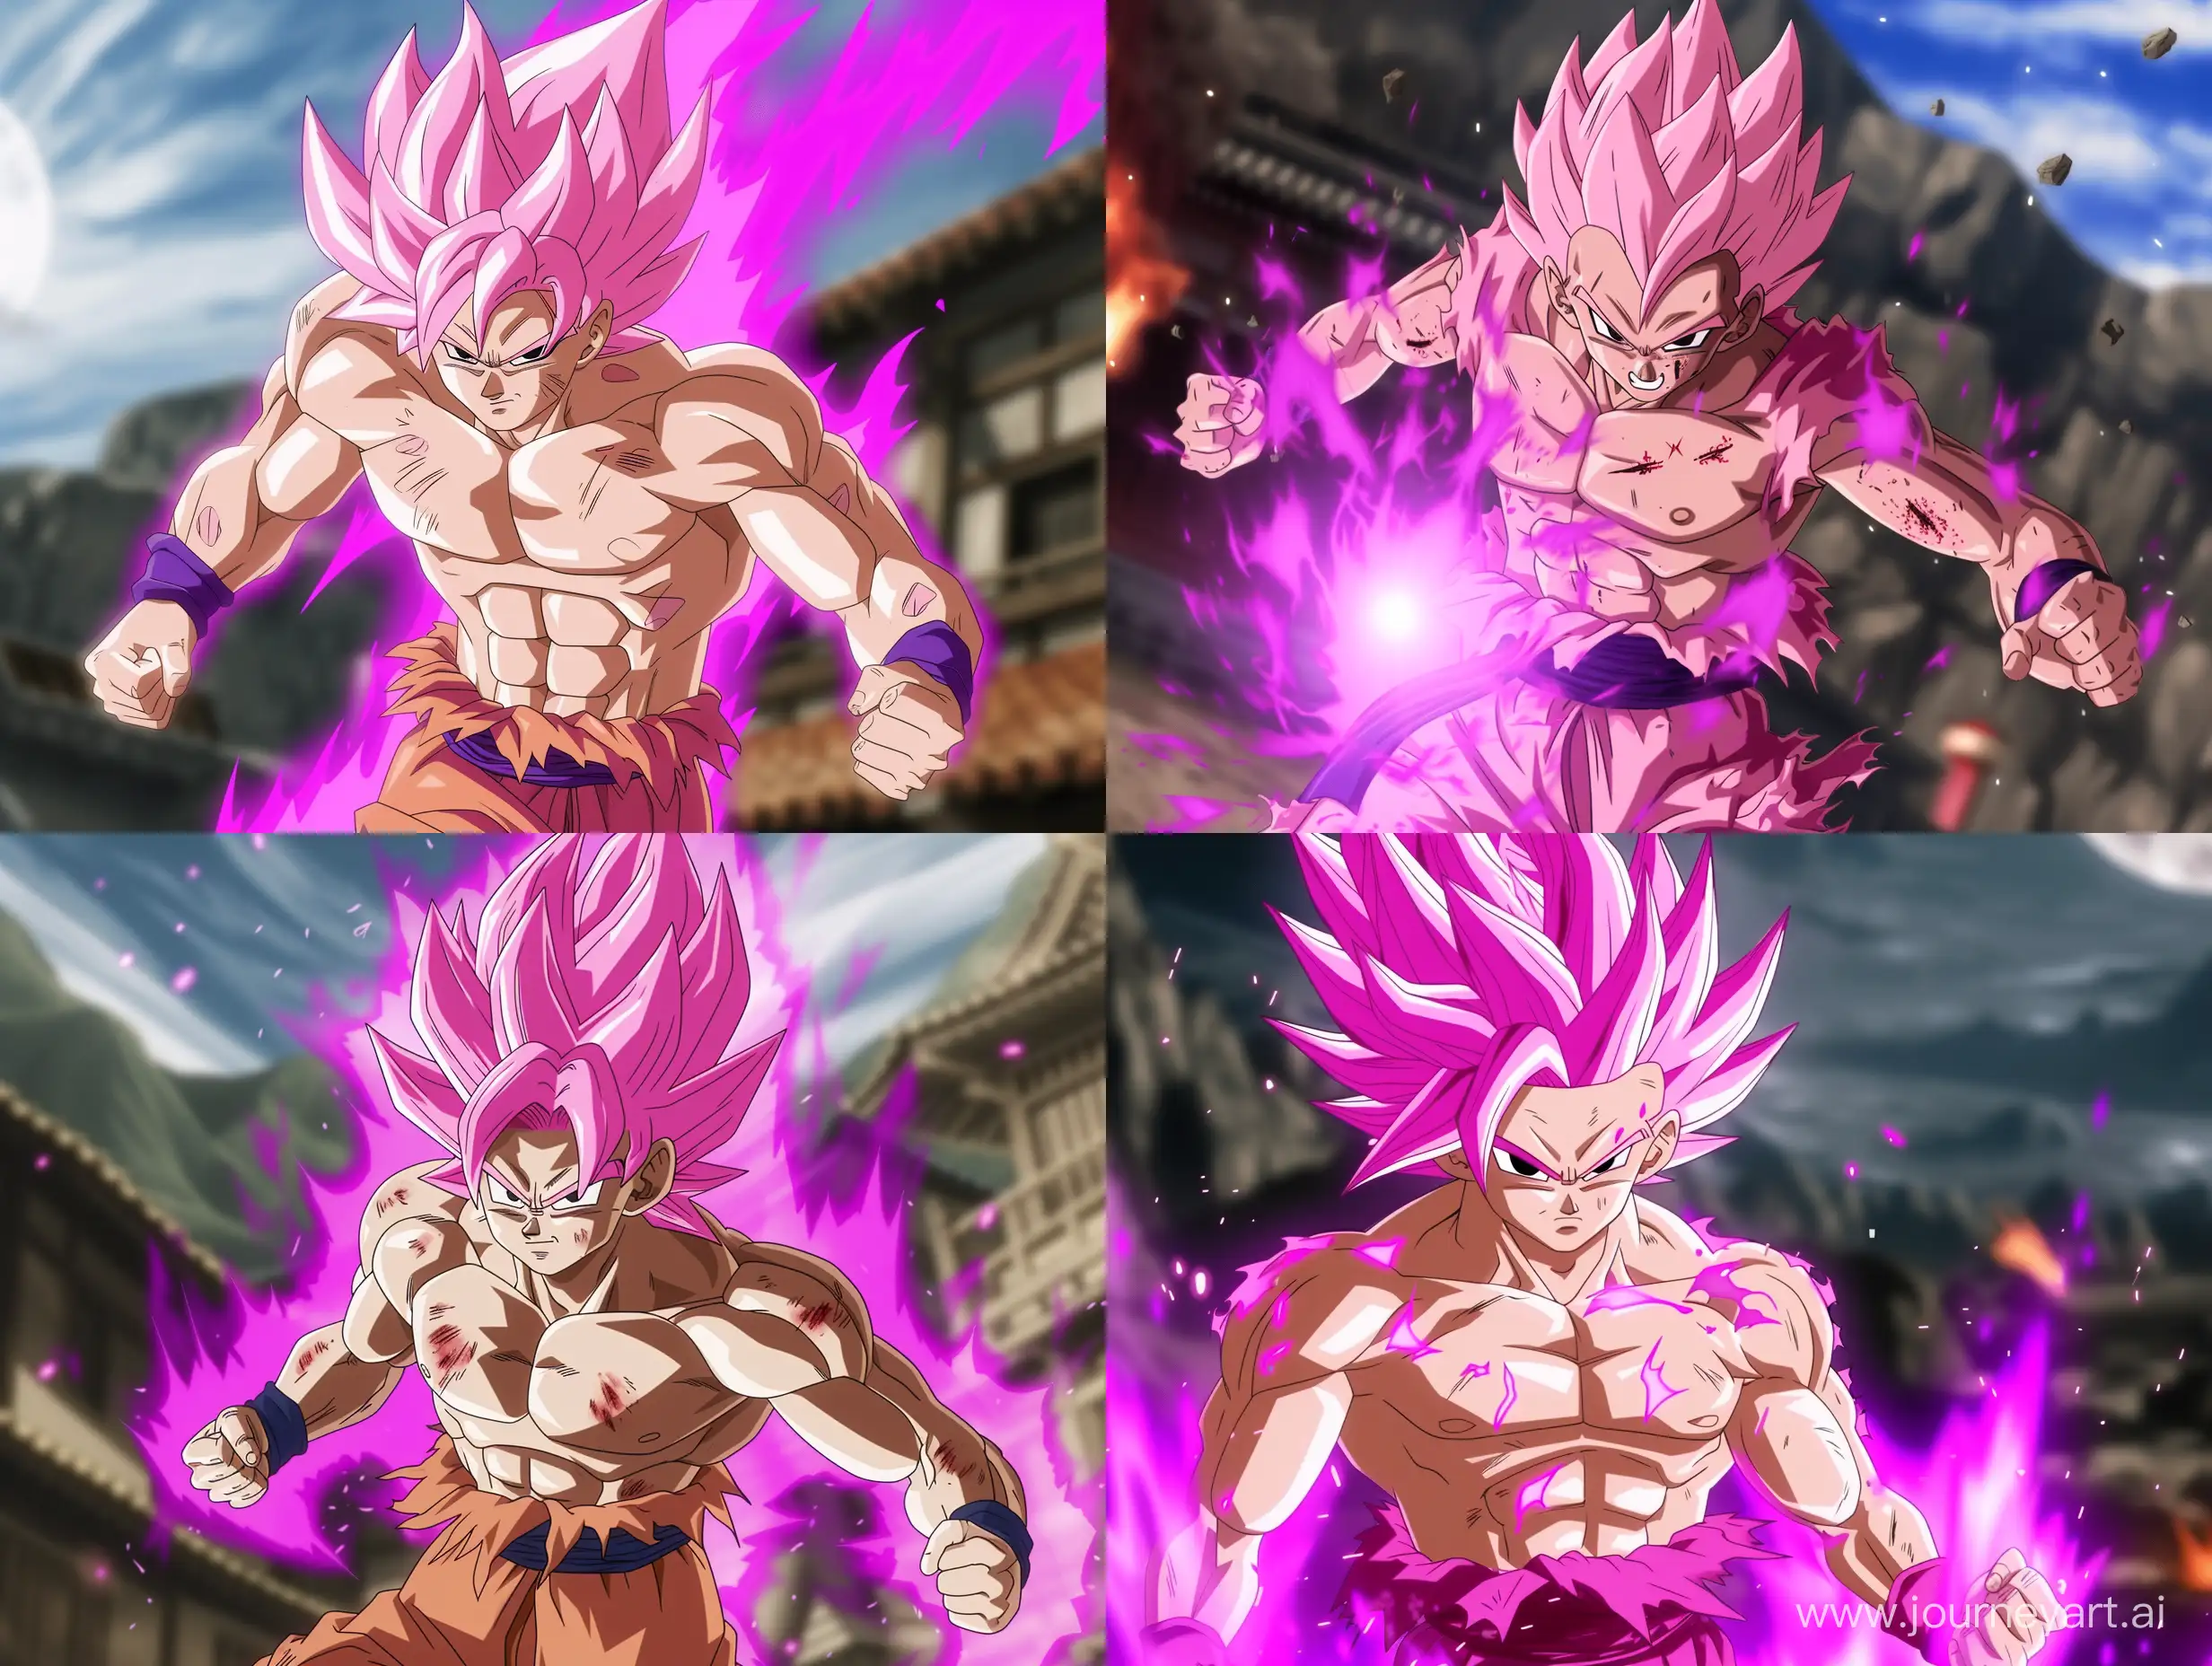 Powerful-Pink-Majin-Anime-Character-Unleashes-Vibrant-Ki-Blast-in-Dragon-Ball-Z-Style